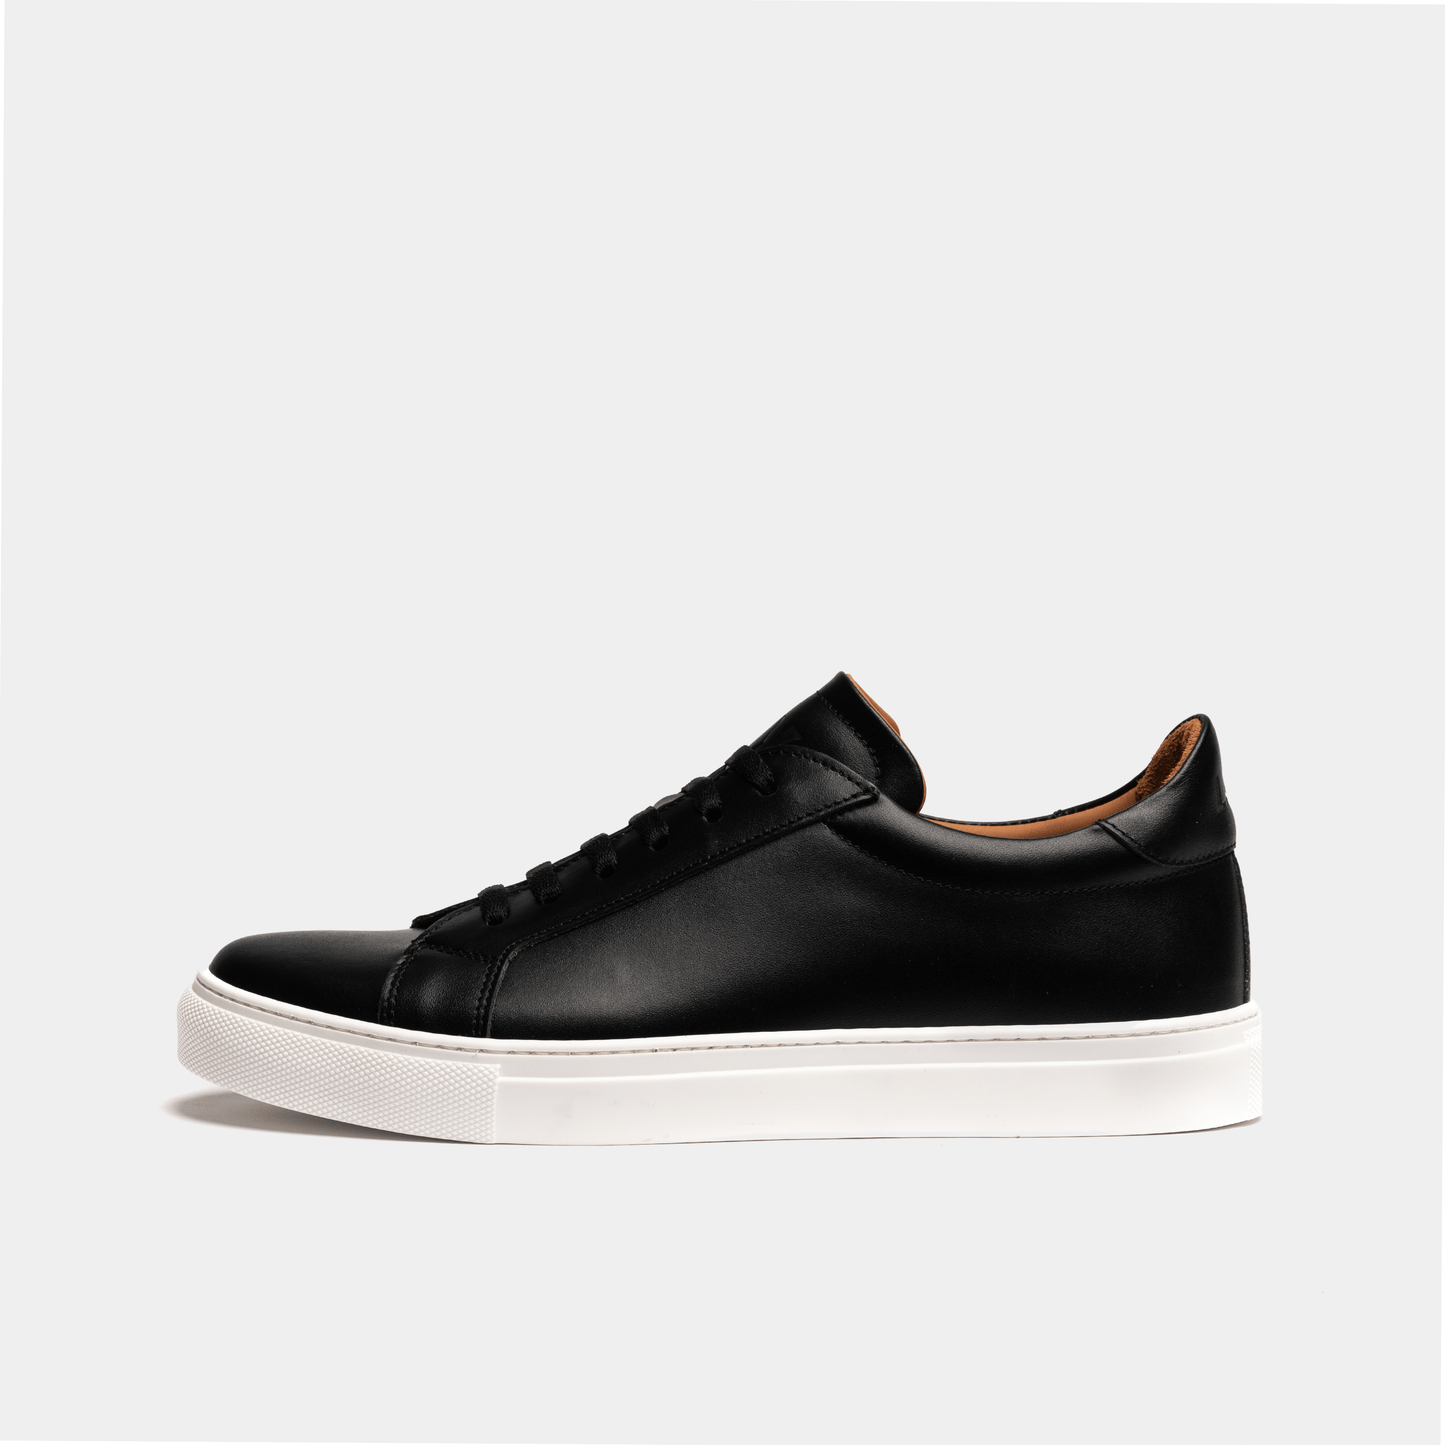 ANCOATS // BLACK-MEN'S SNEAKER | LANX Proper Men's Shoes